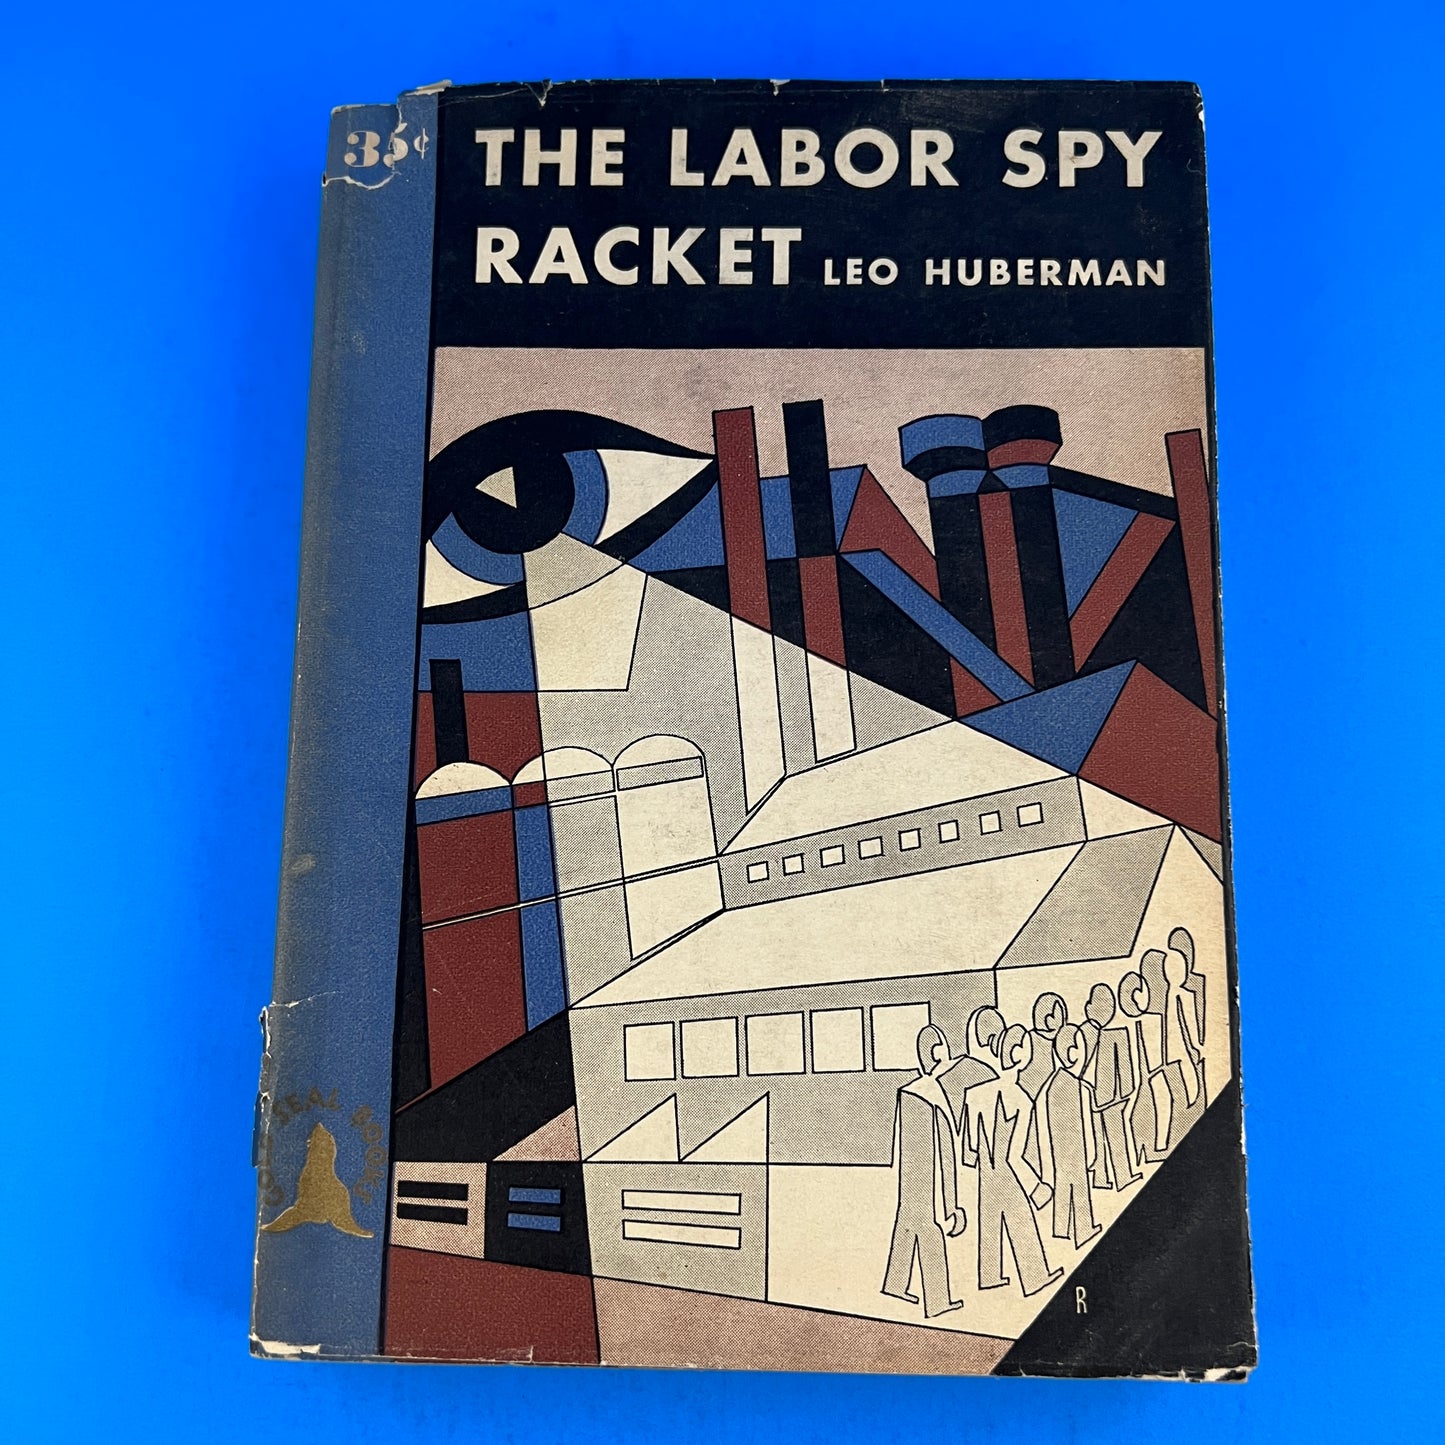 The Labor Spy Racket